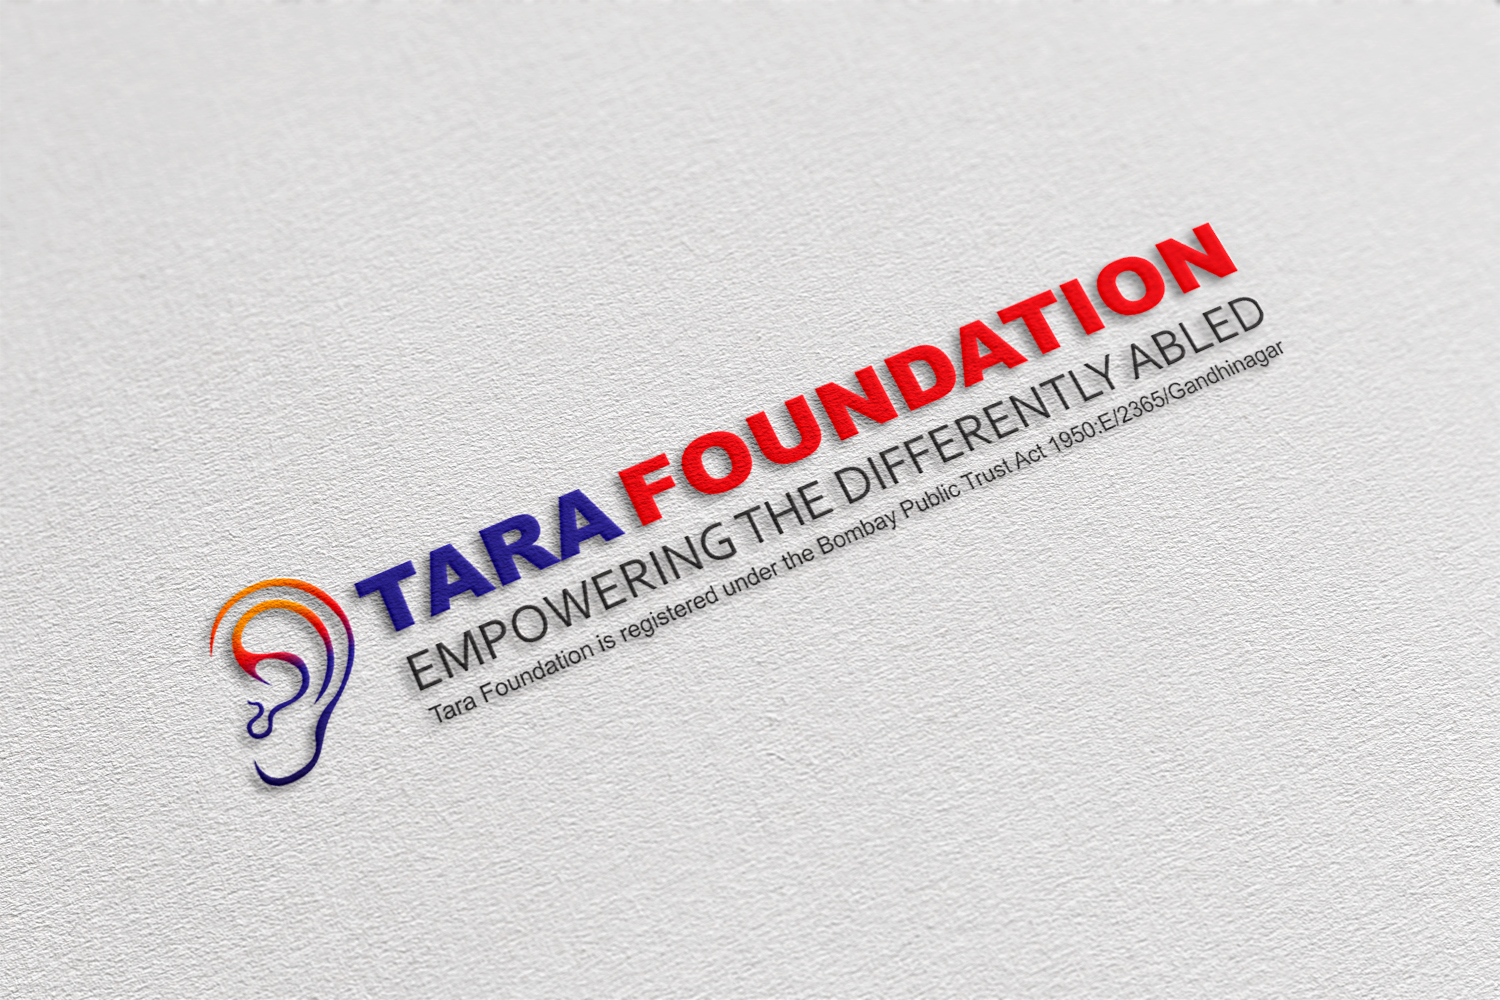 tara foundation